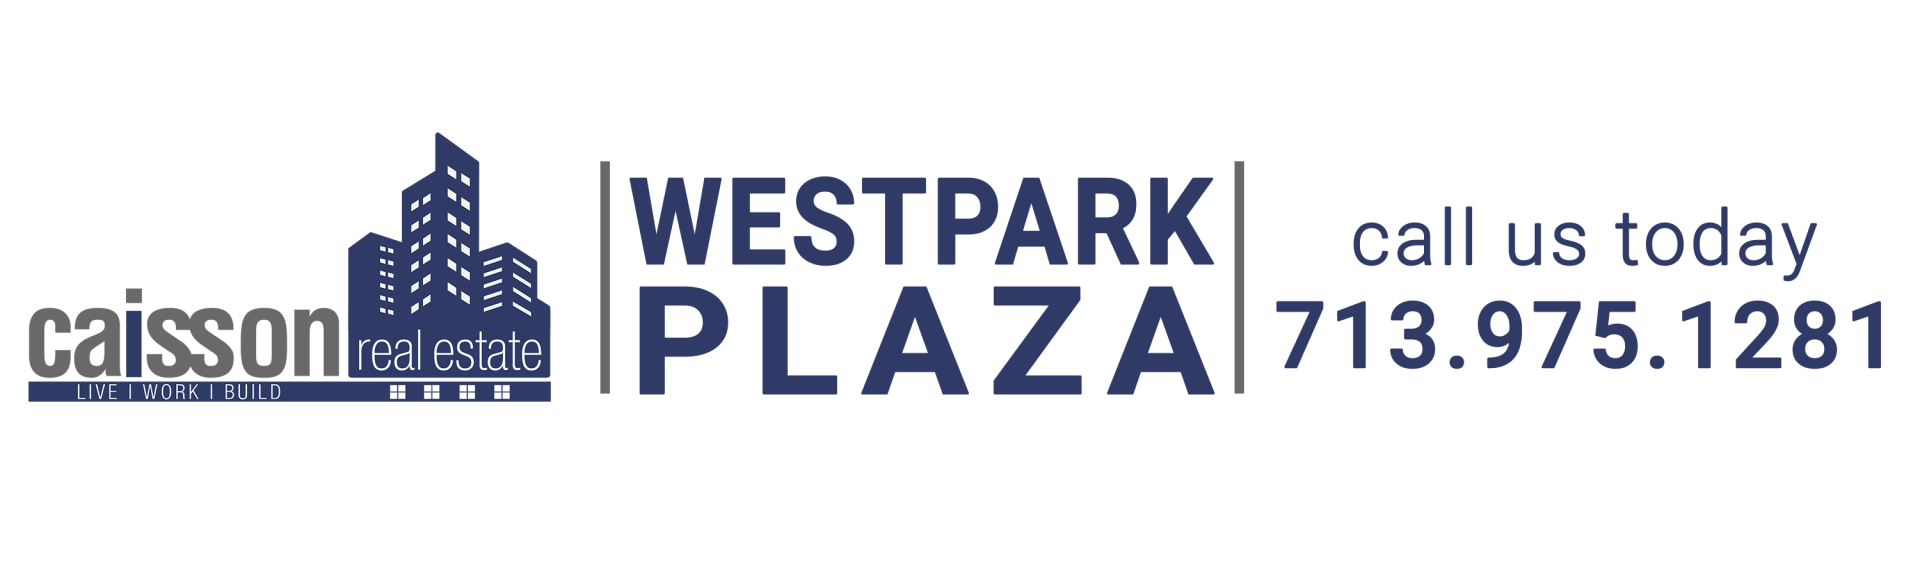 westpark plaza logo